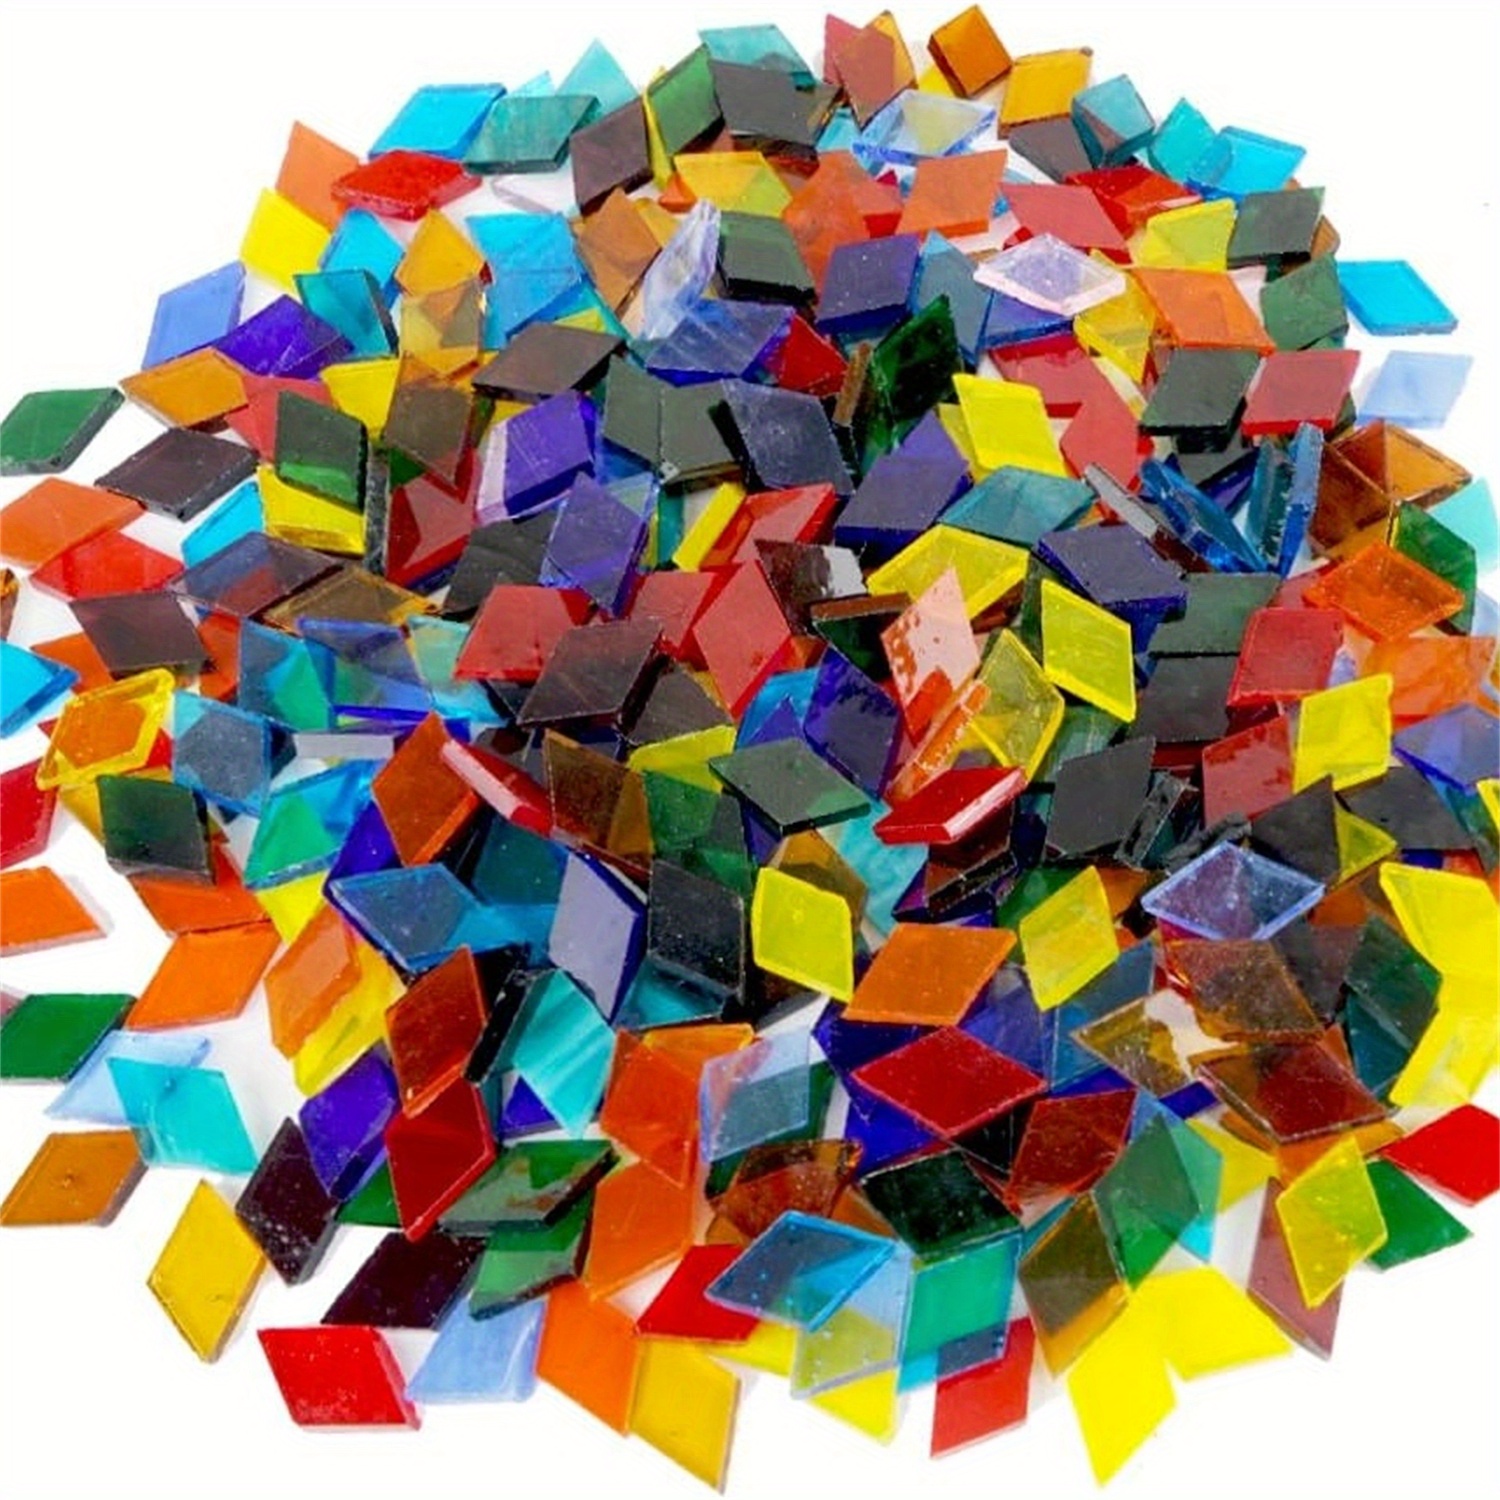 

200pcs/pack Mixed Color Transparent Rhombus Glass Mosaic Tiles, Diy Craft Glass Pieces For Mosaic Lamps, Handcraft Art Materials